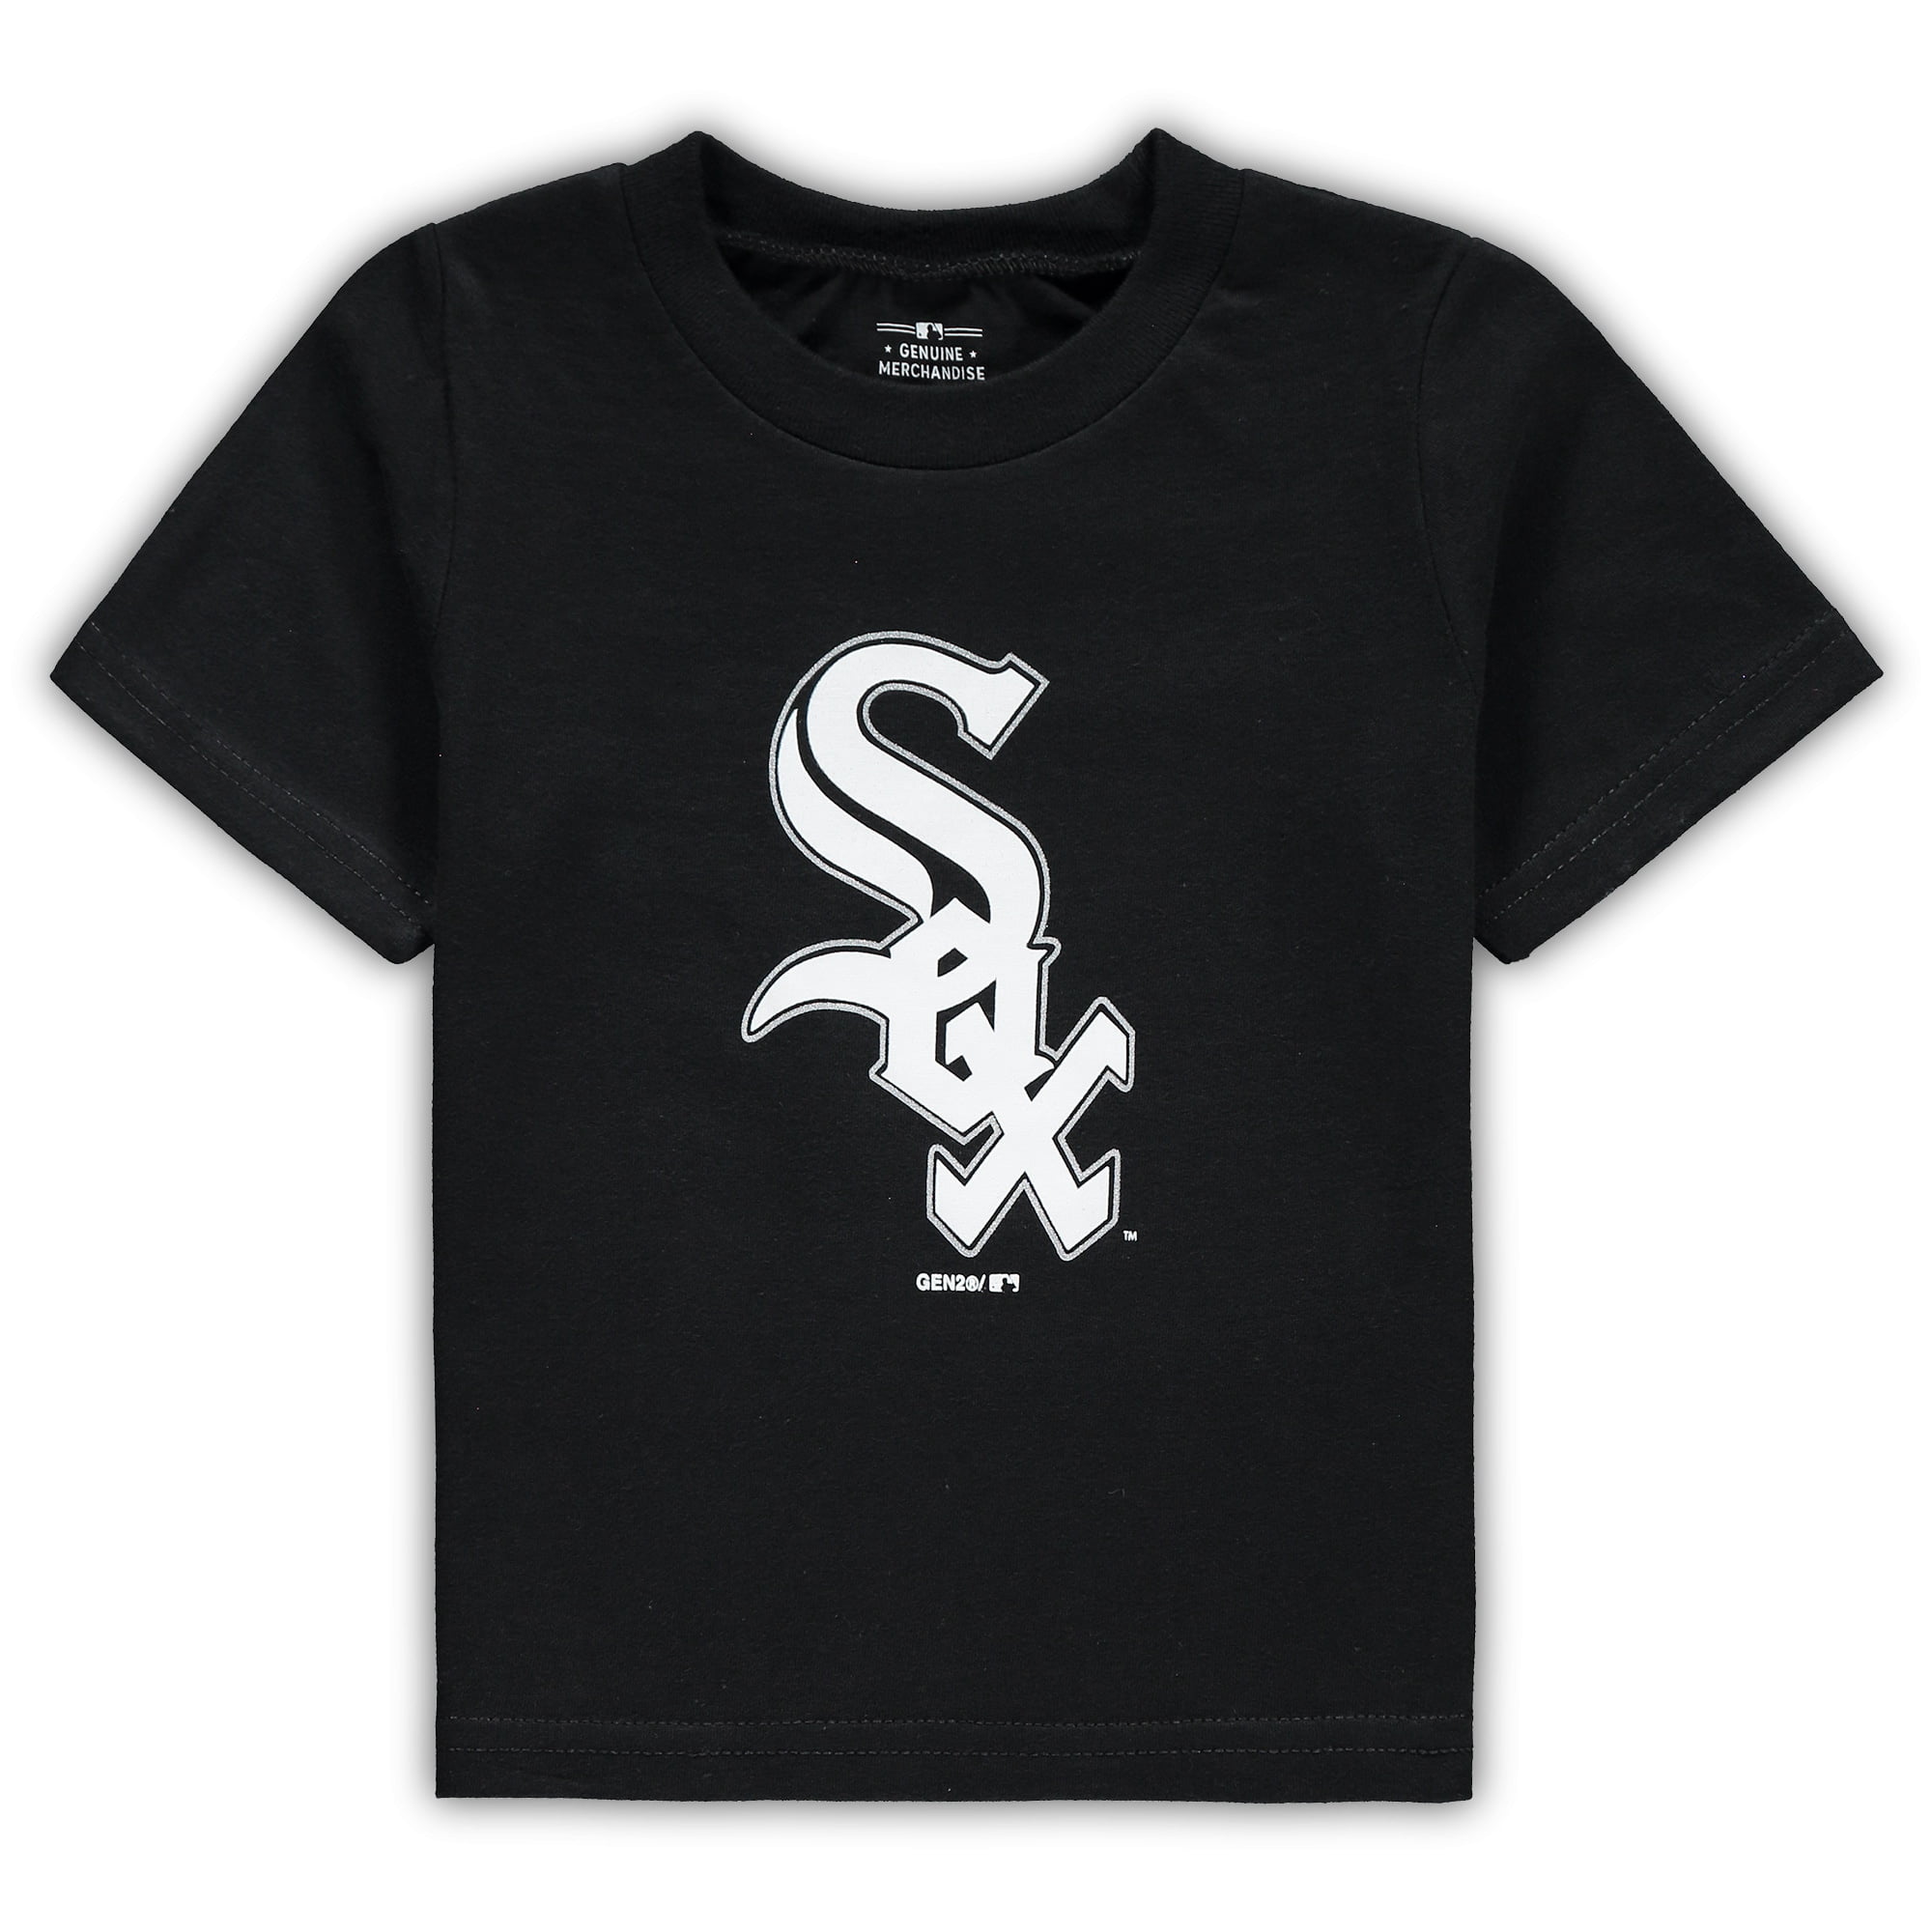 Chicago White Sox Team Logo T-Shirt